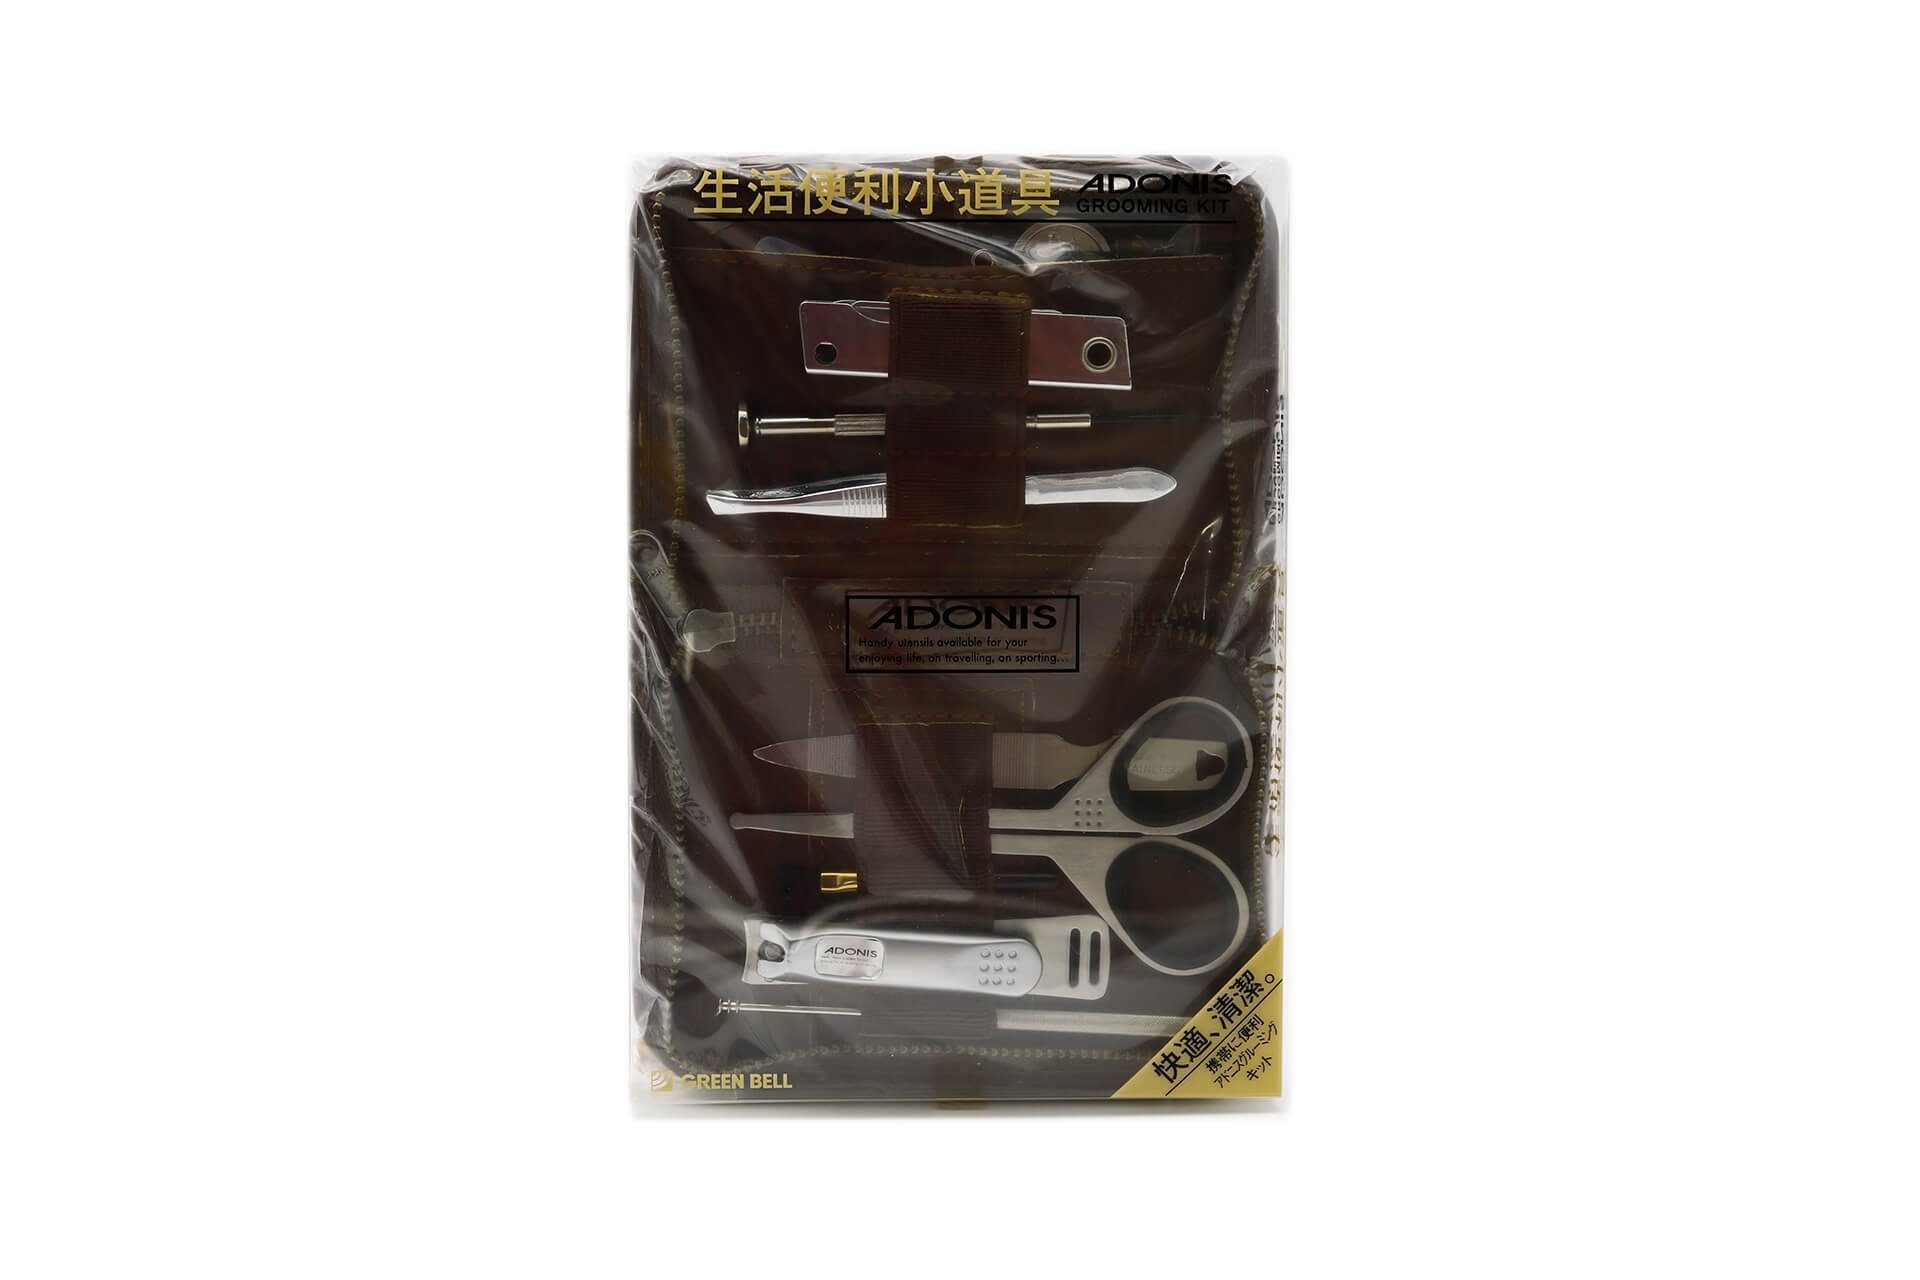 Maniküre-Pediküre-Set aus Qualitätsprodukt Seki cm, 11.7x8x2.8 handgeschärftes mit Japan Adonis EDGE Nagelpflegeset AG-500 Etui 9-teilig